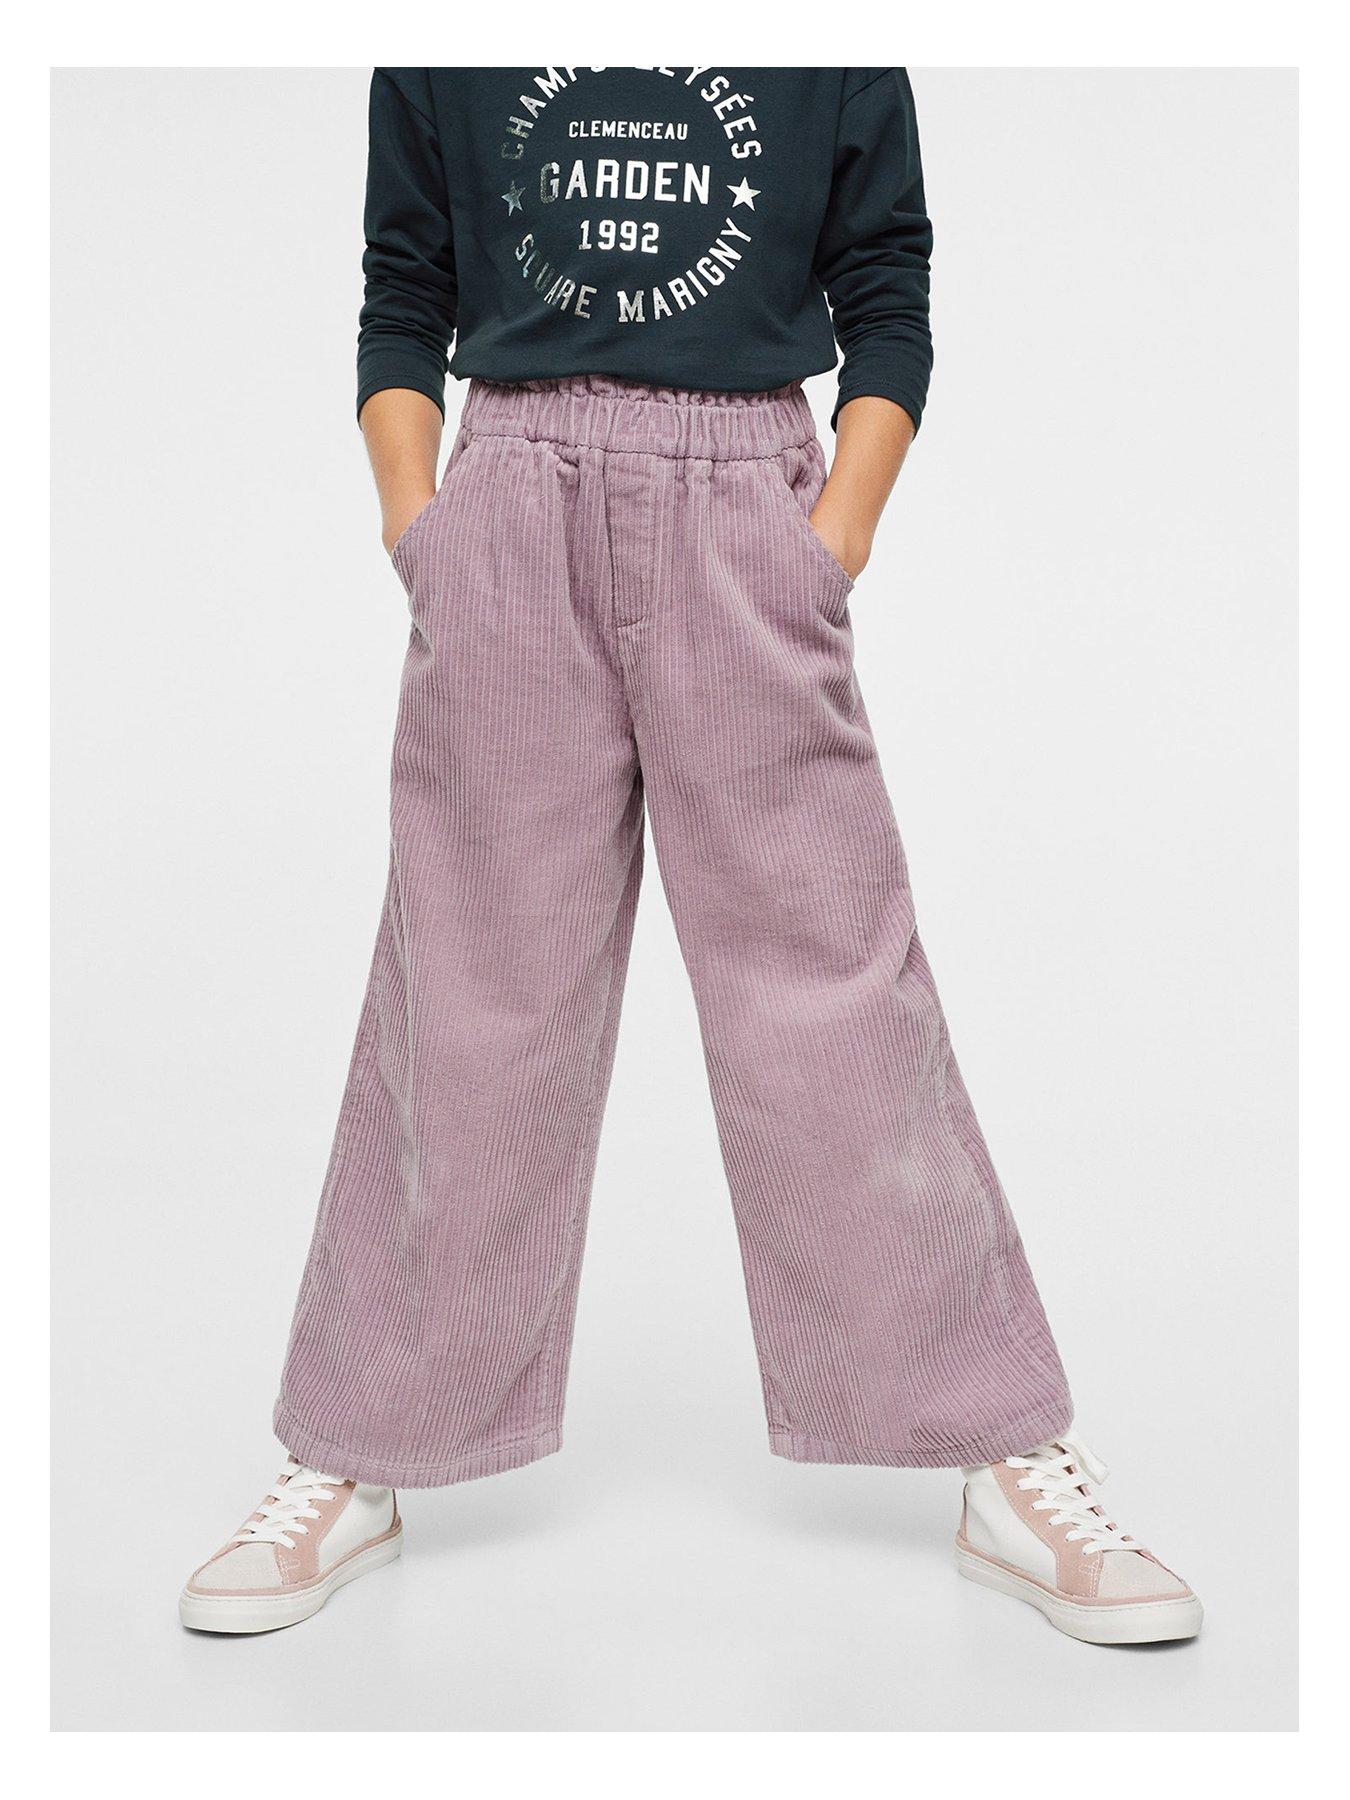 KIDS FASHION Trousers Print discount 63% Pink 7Y Zippy Leggings 